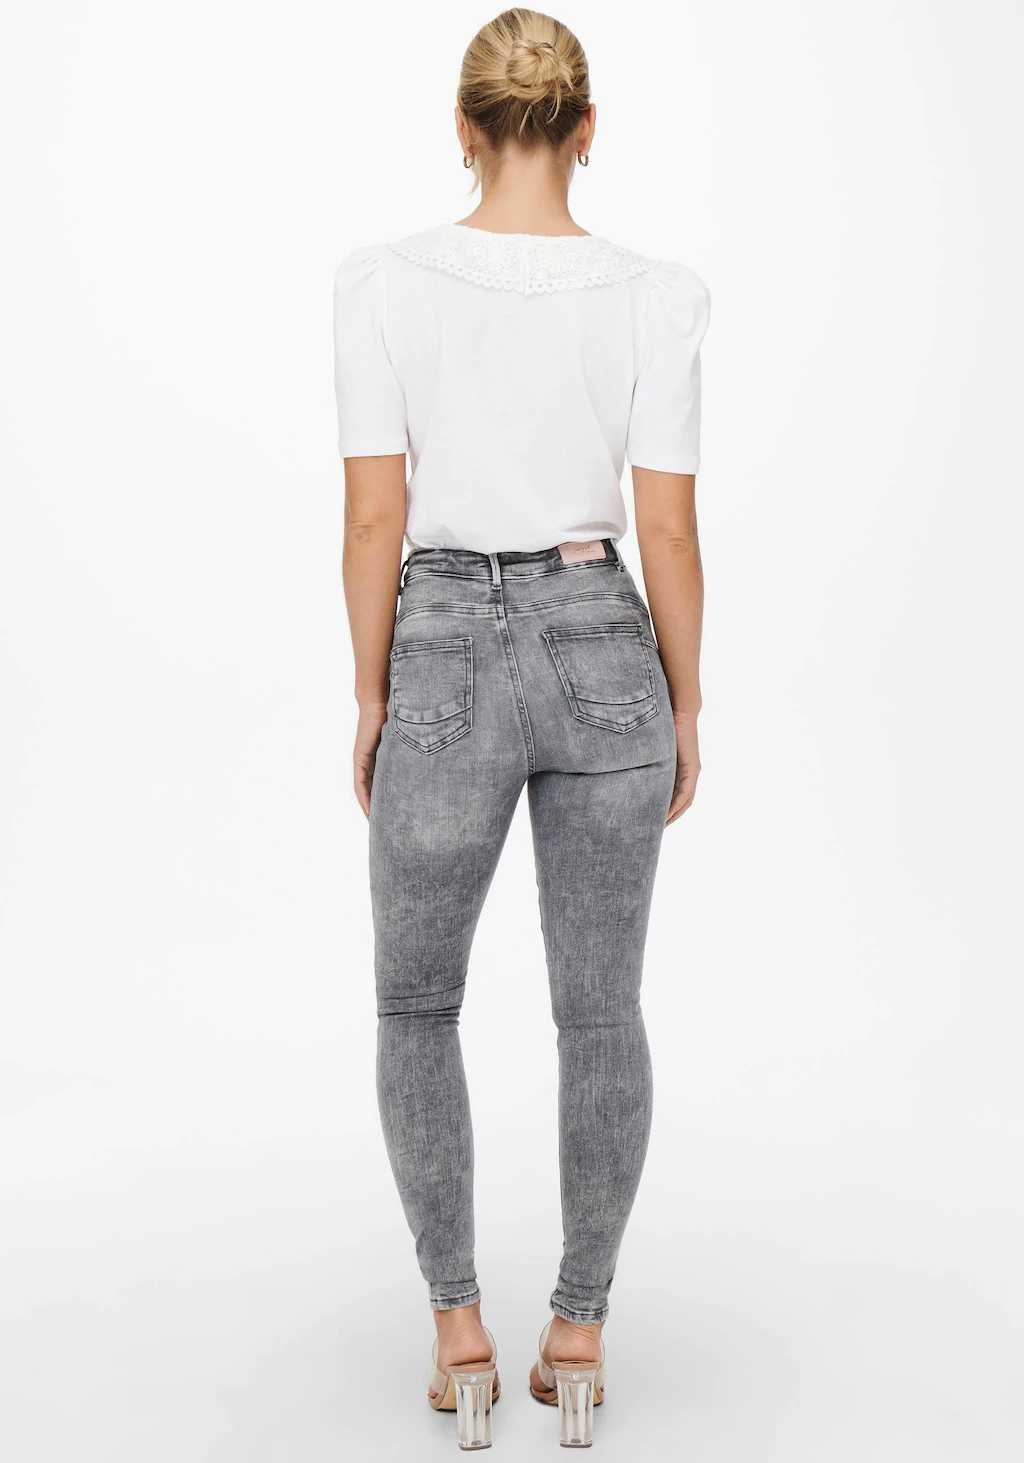 Only Damen Jeans ONLPOWER MID PUSH UP SK AZG937 - Skinny Fit - Grau - Grey günstig online kaufen